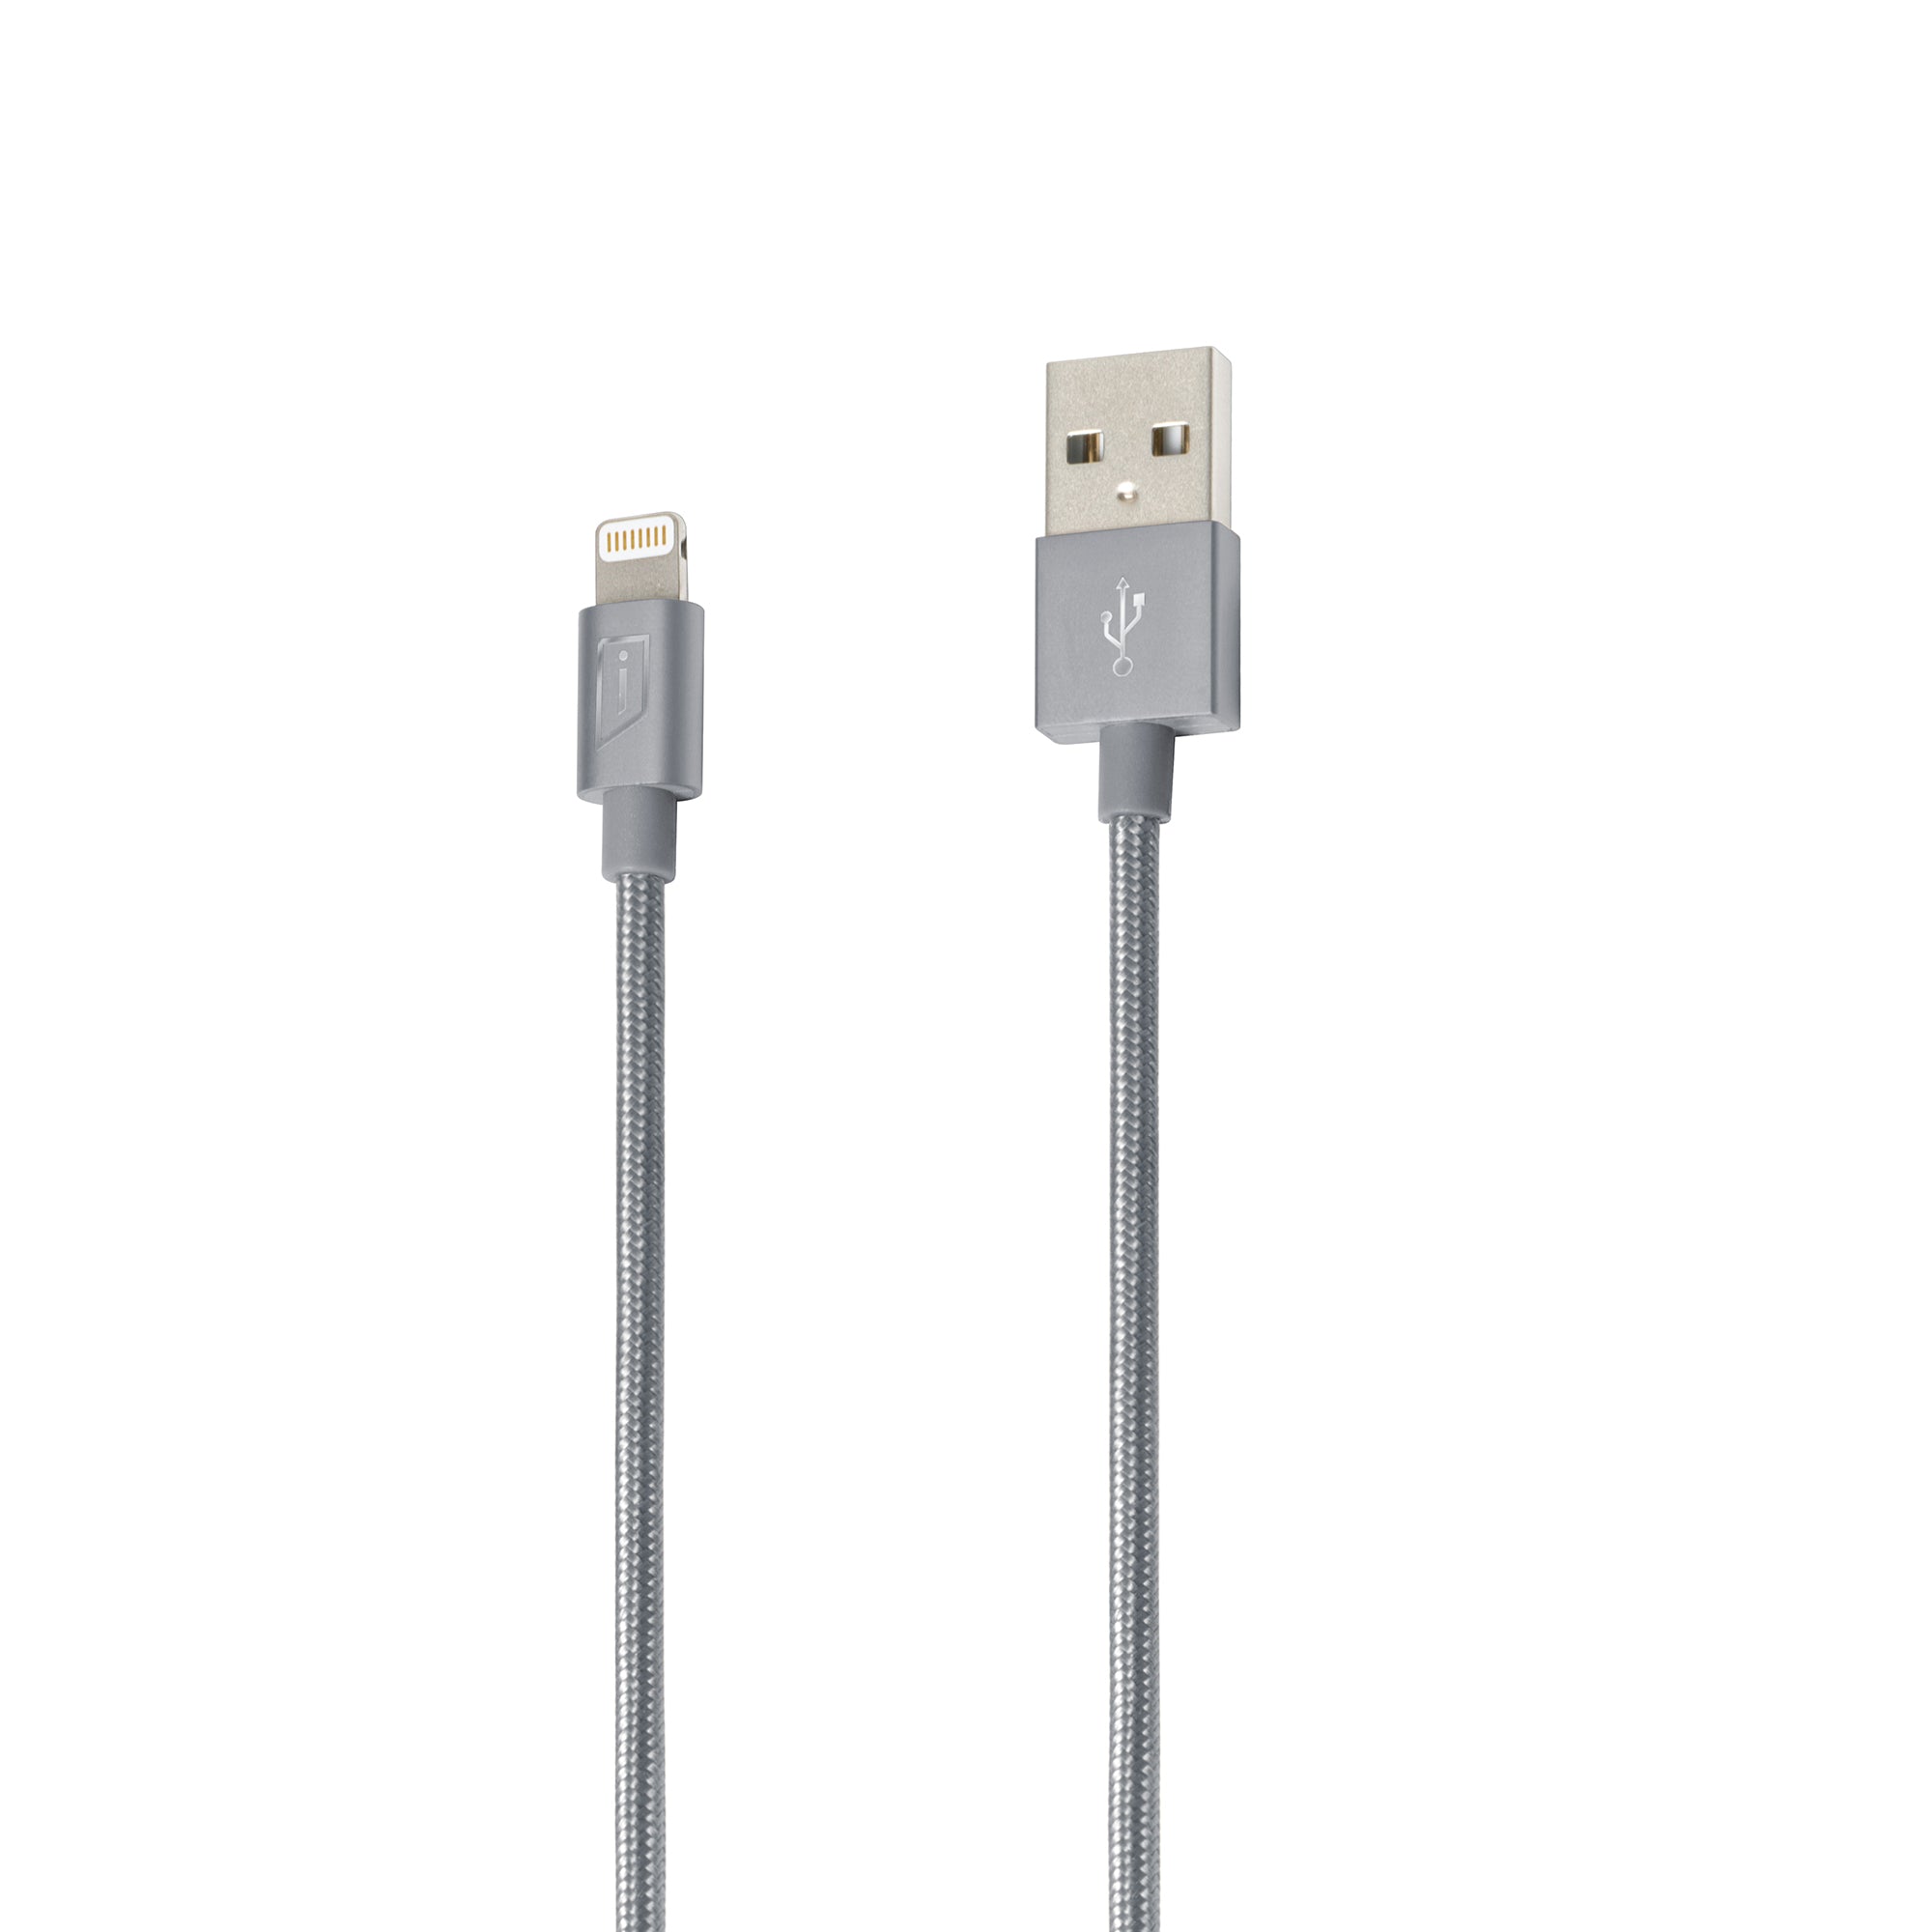 Lot 100 câble USB Lightning blanc iPhone iPad iPod